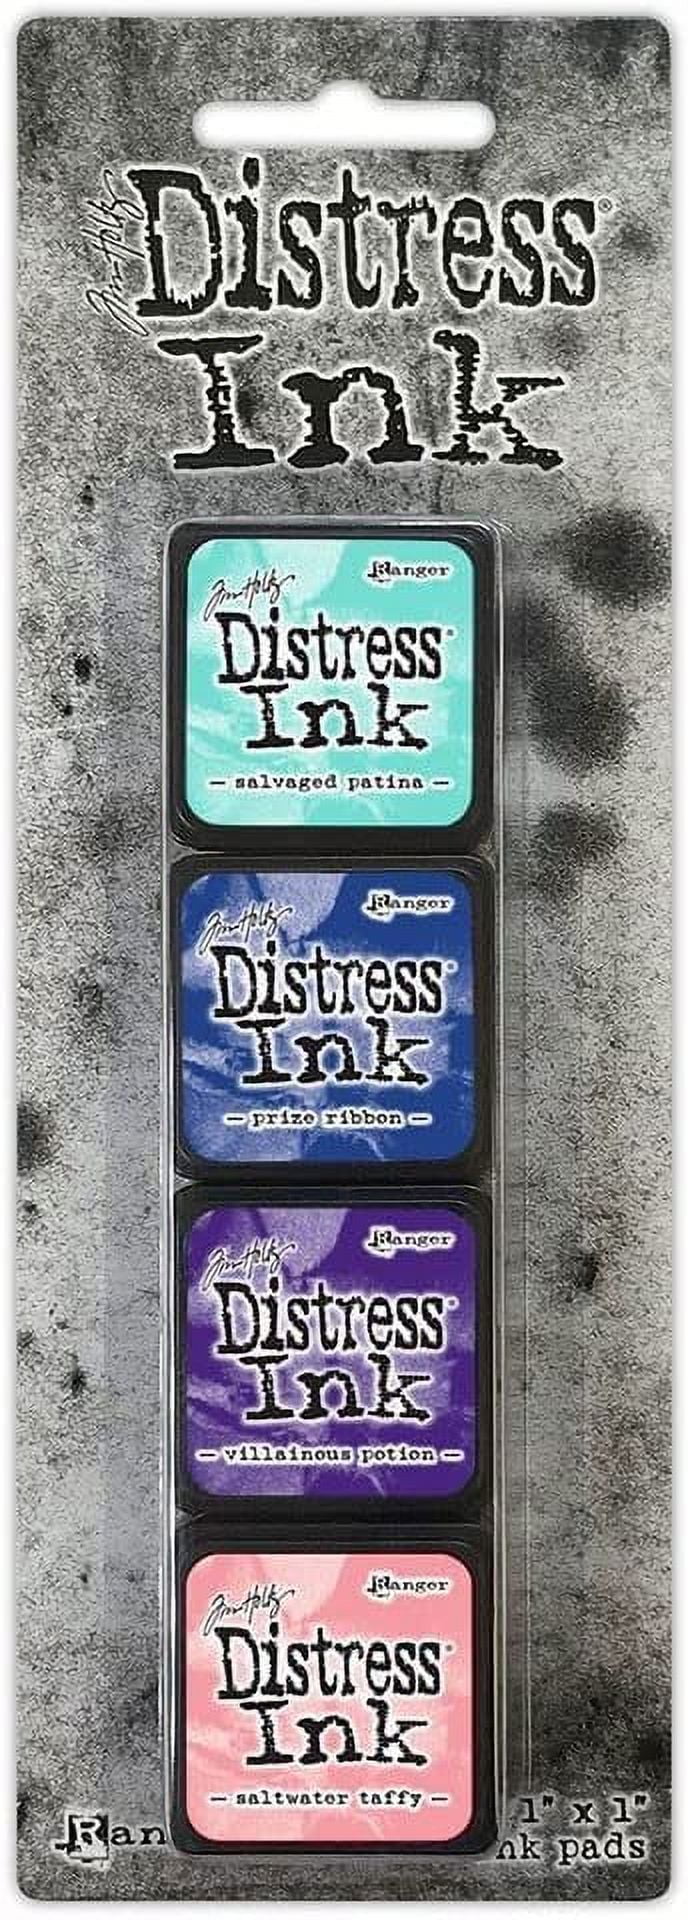 Tim Holtz Mini Distress Ink Pads Sets 4, 5, And 6 Ranger